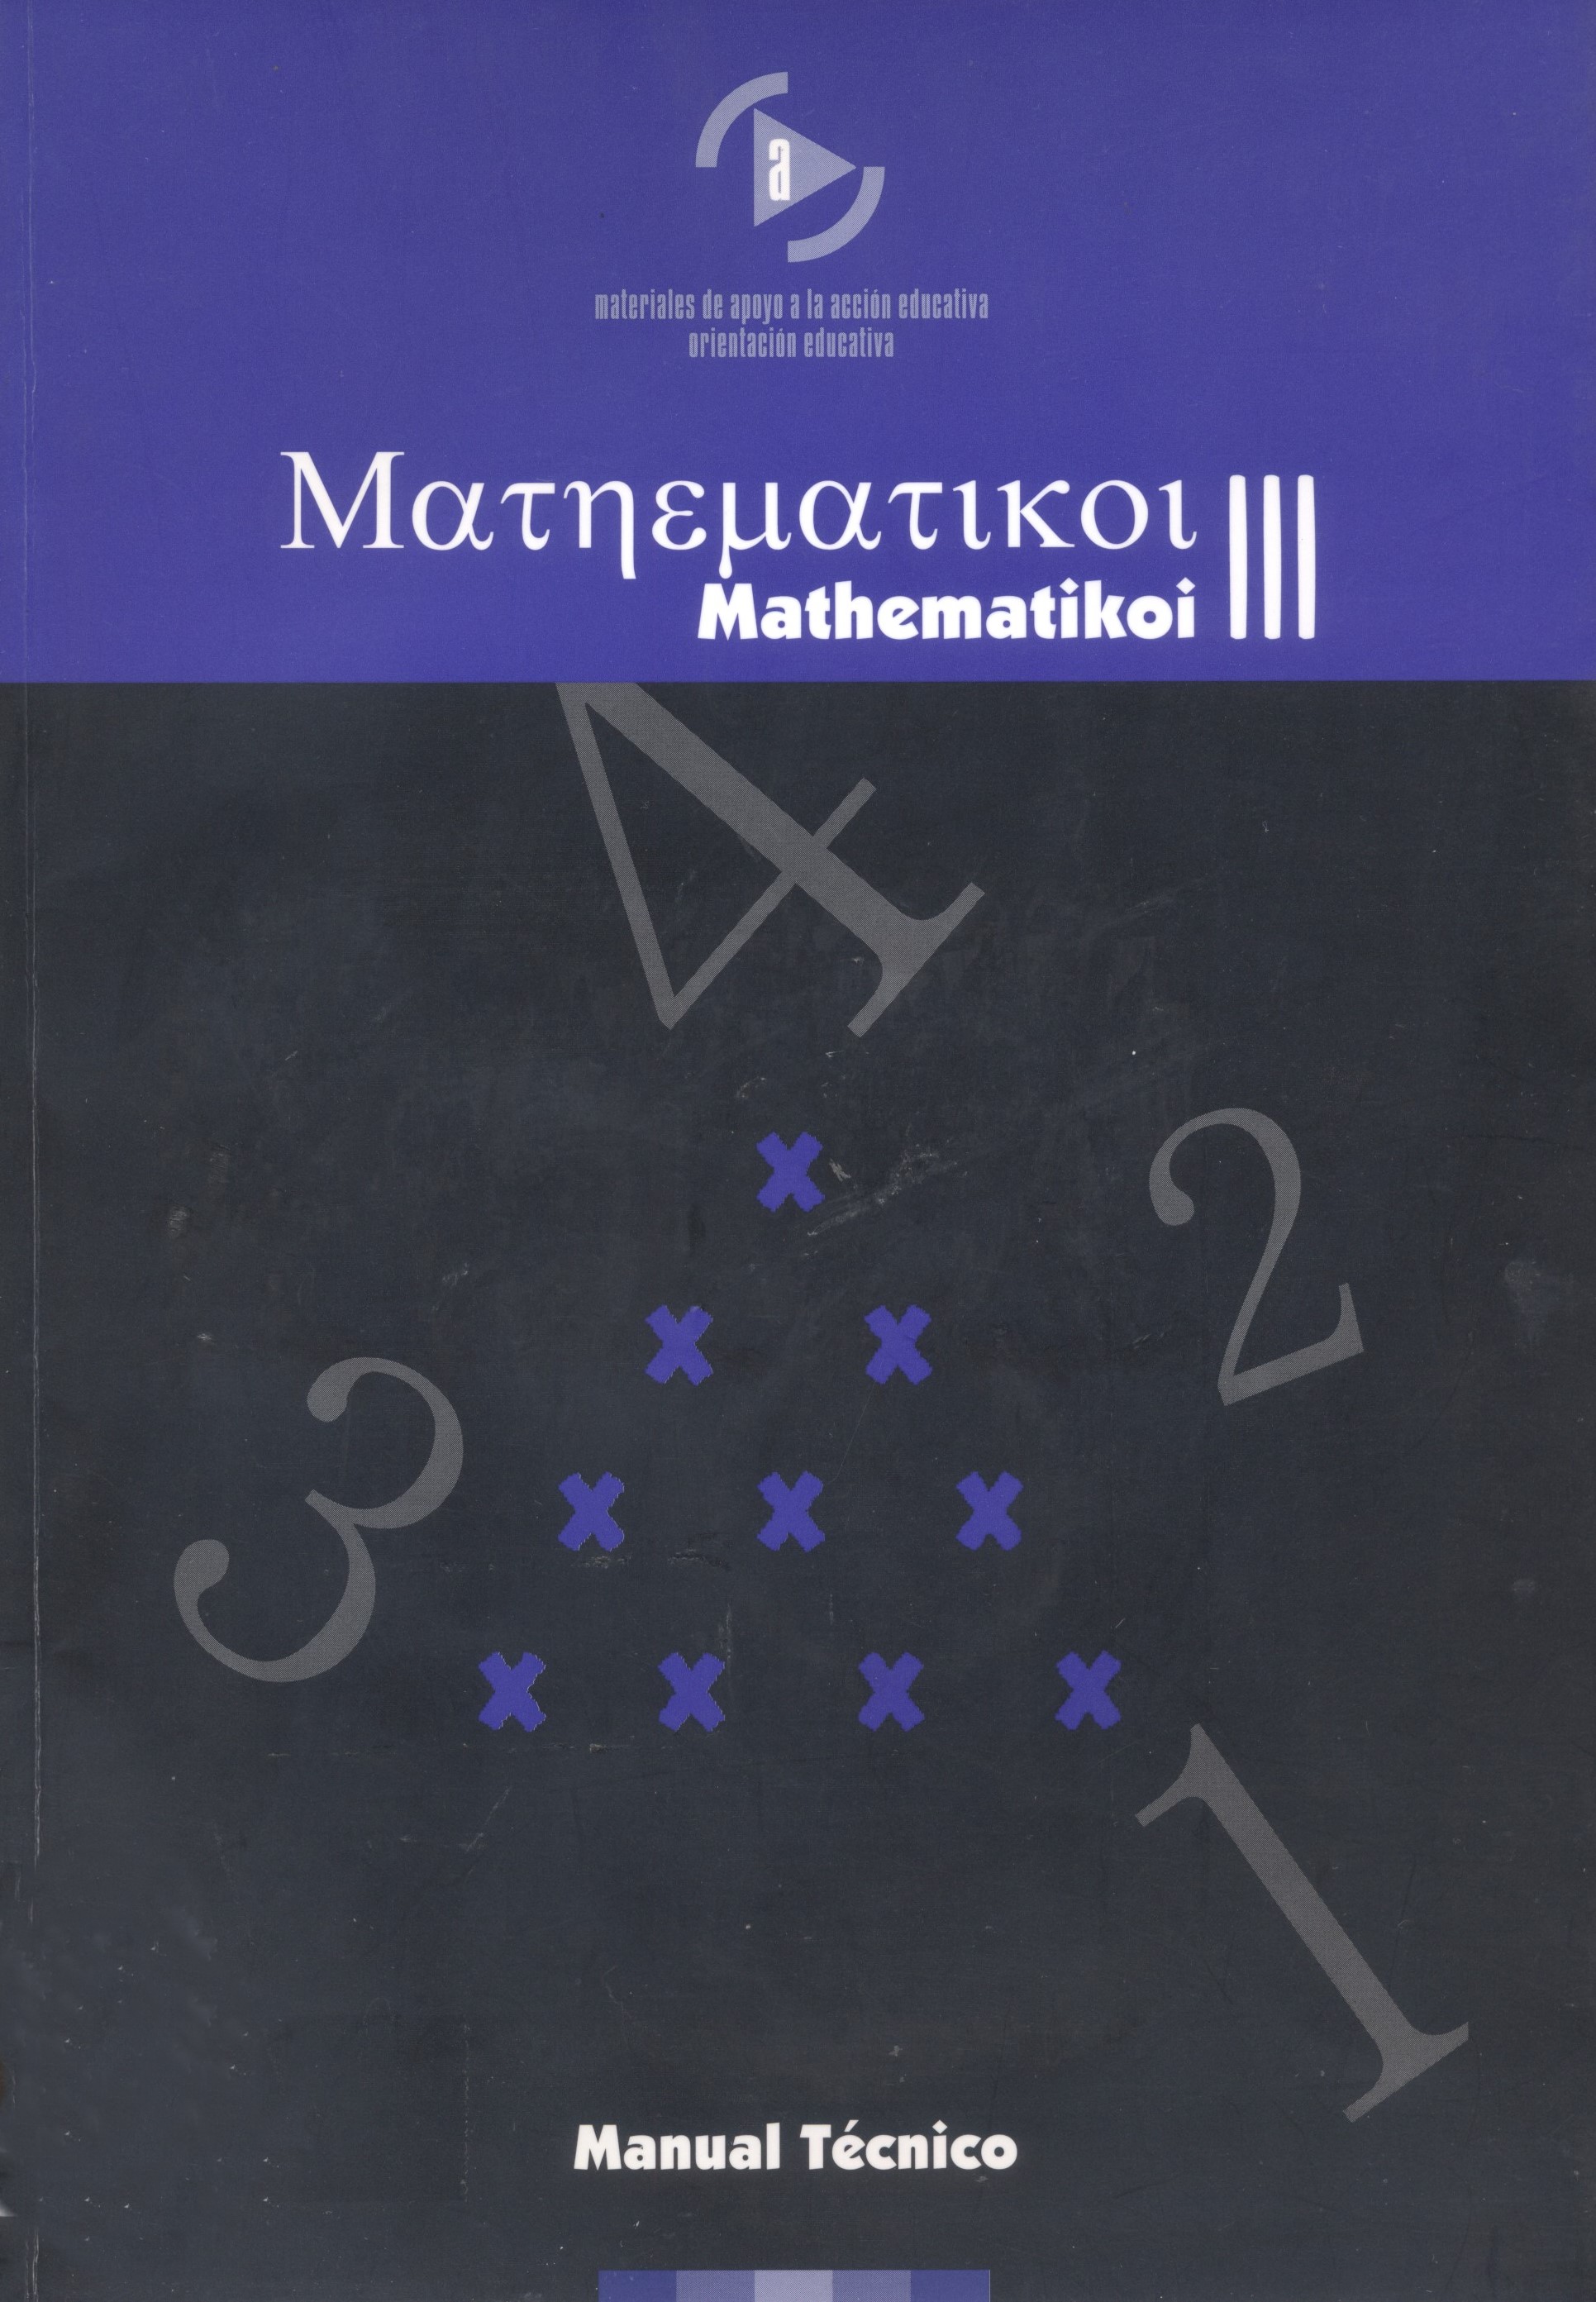 Imagen de portada del libro Mathematikoi III